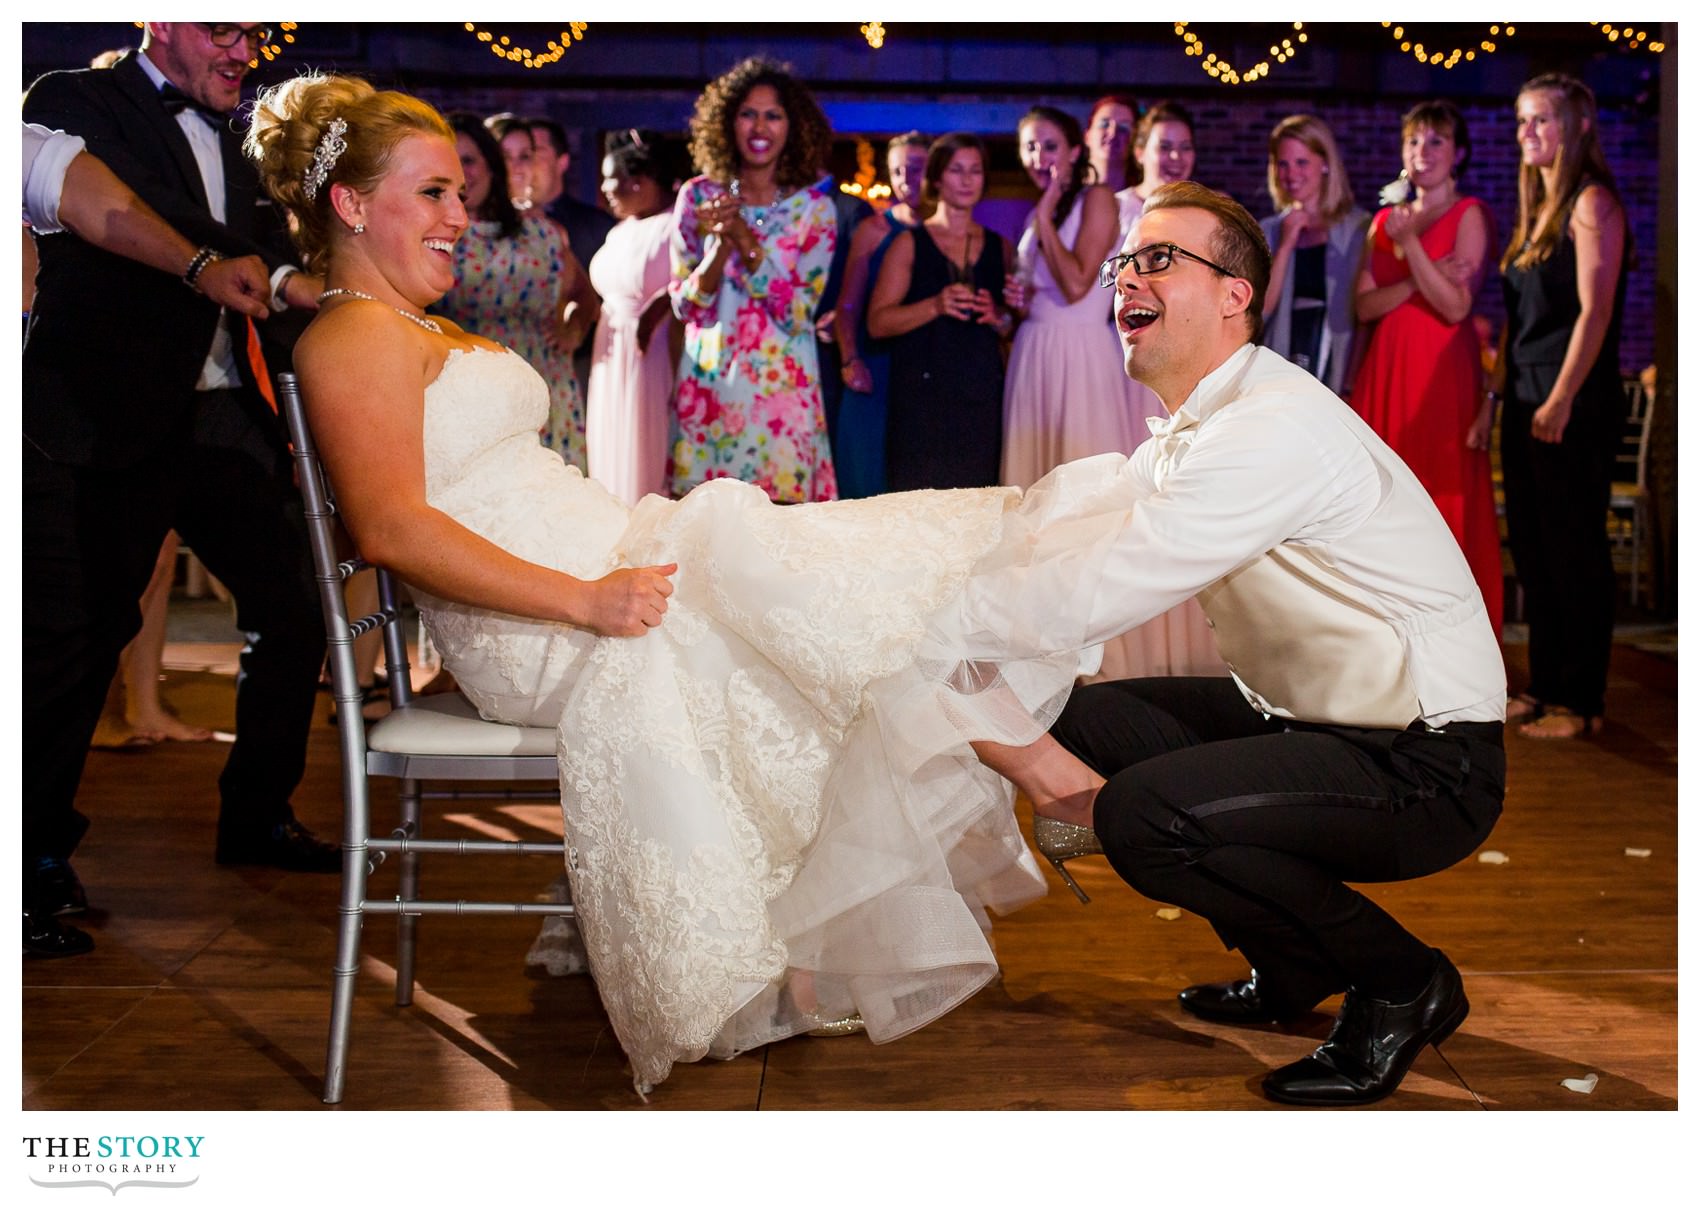 groom takes off bride's garter at wedding reception